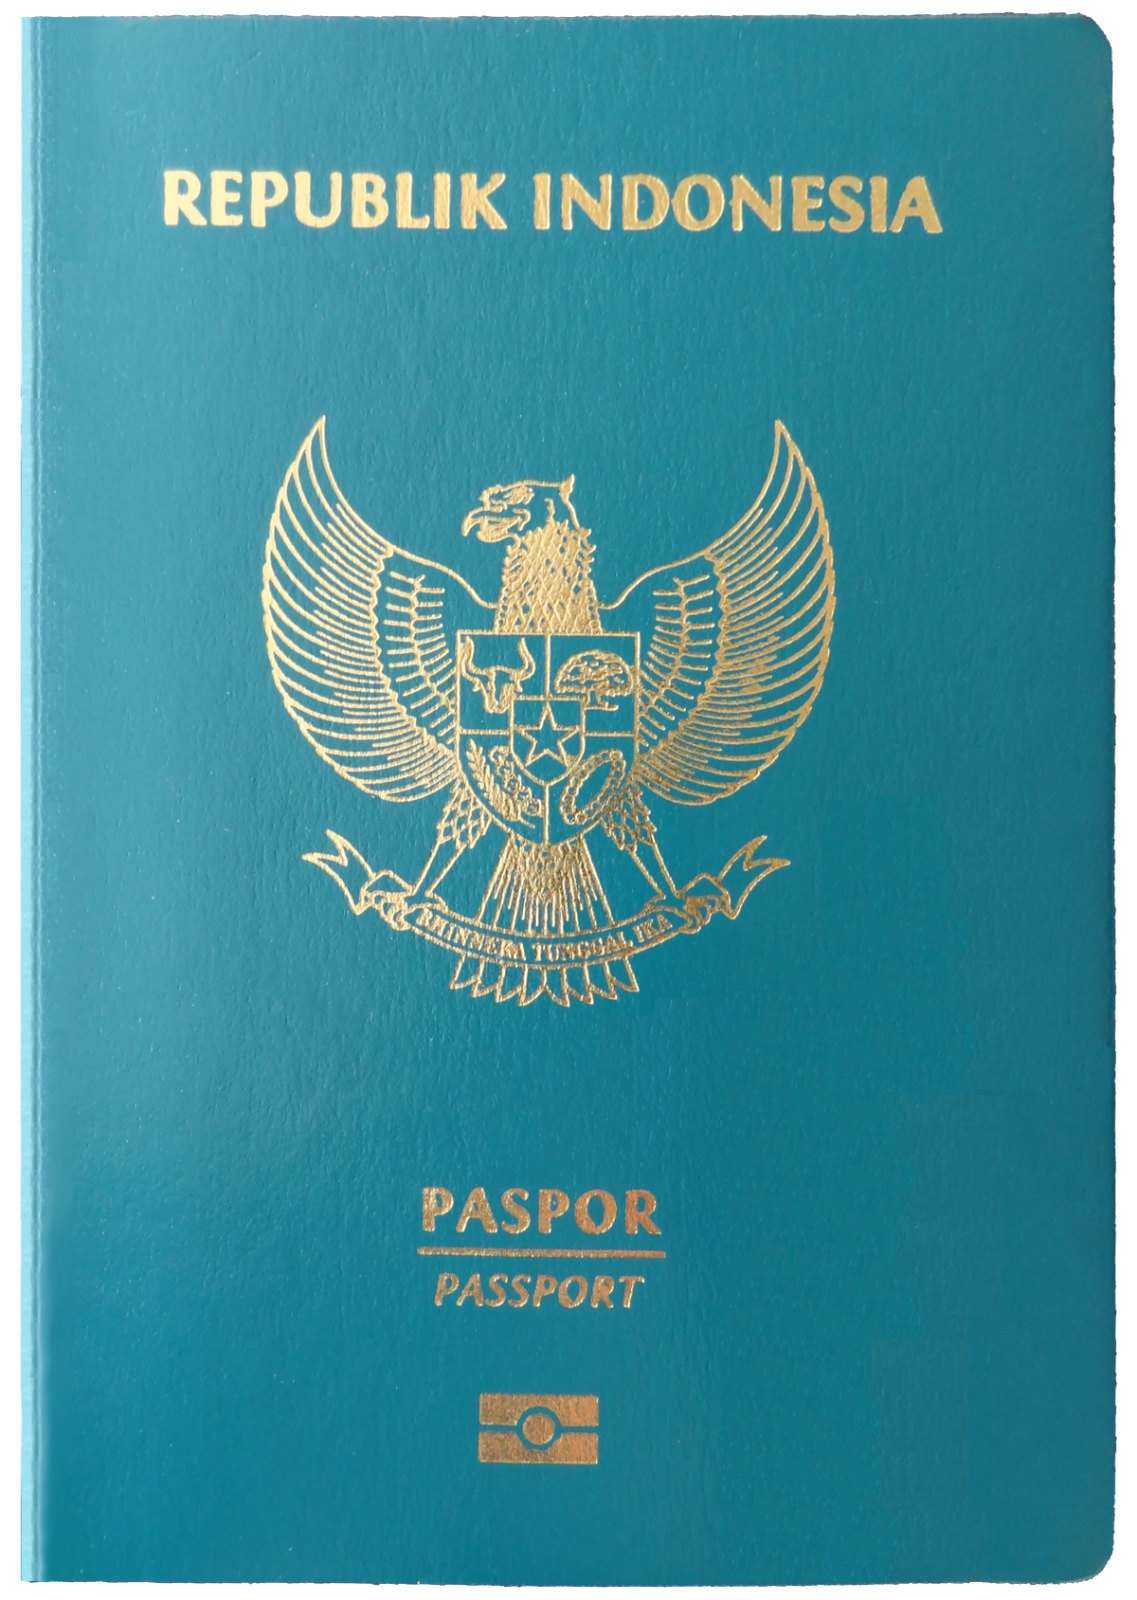 Perbedaan e paspor dengan paspor biasa